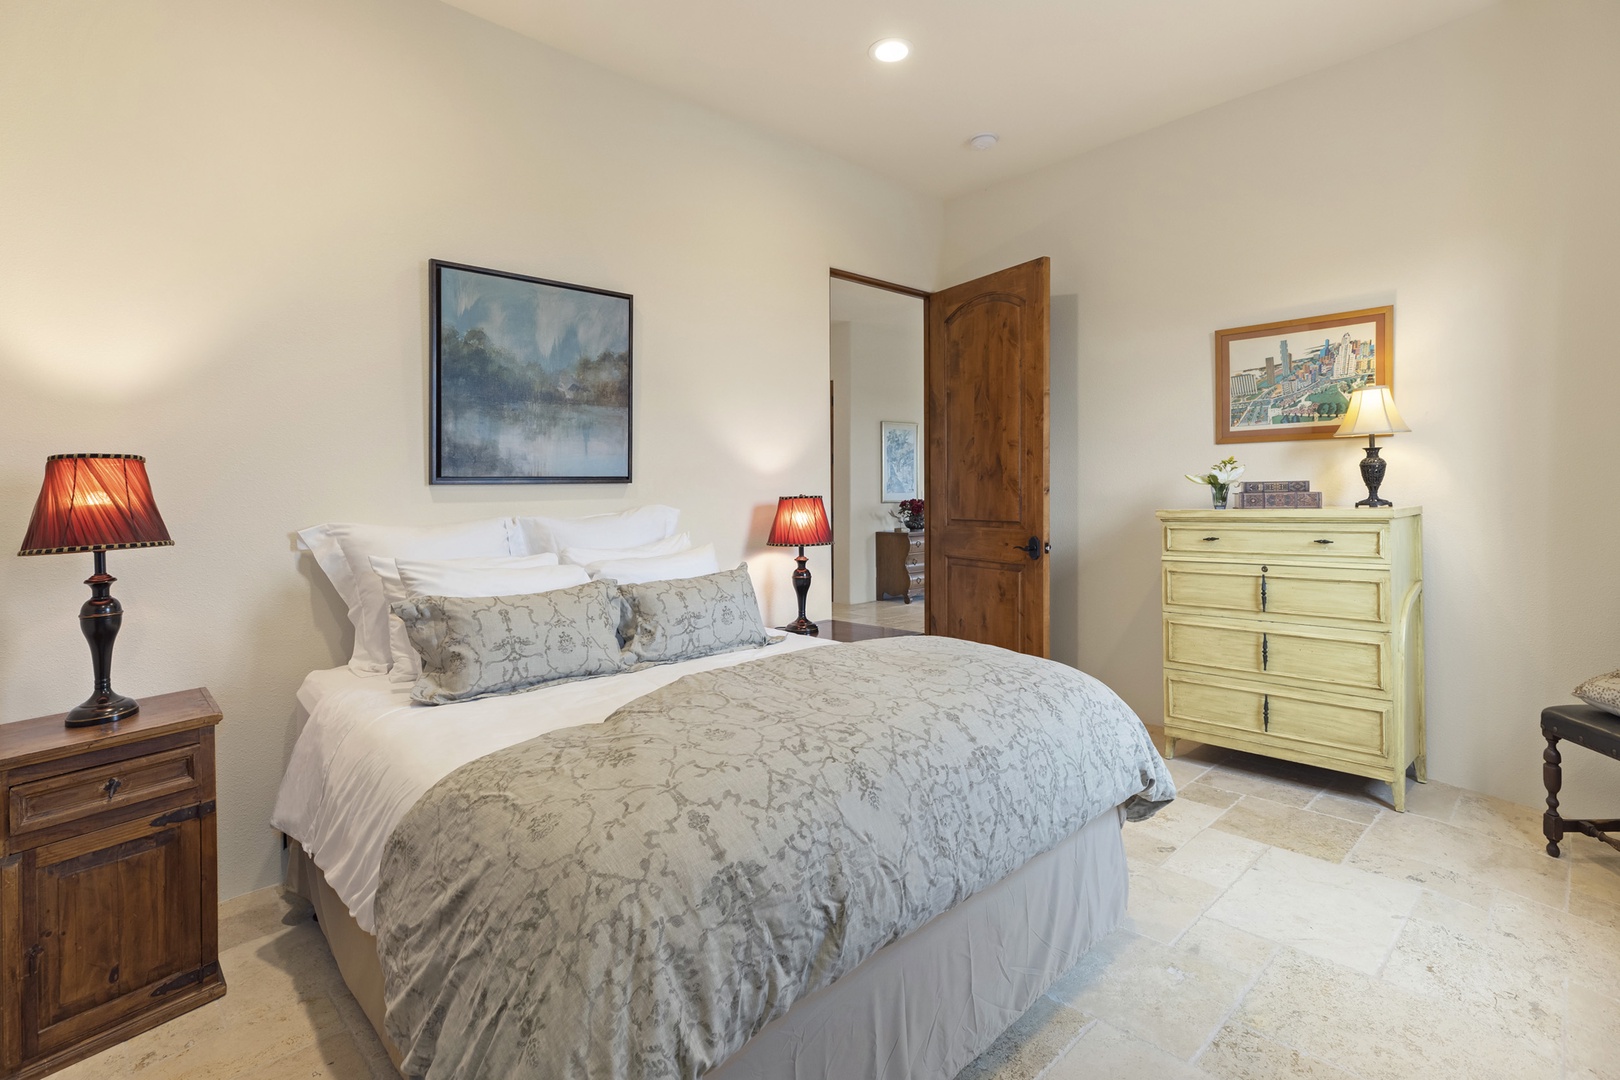 Fairfield Vacation Rentals, Villa Capricho - Guest House bedroom with queen bed